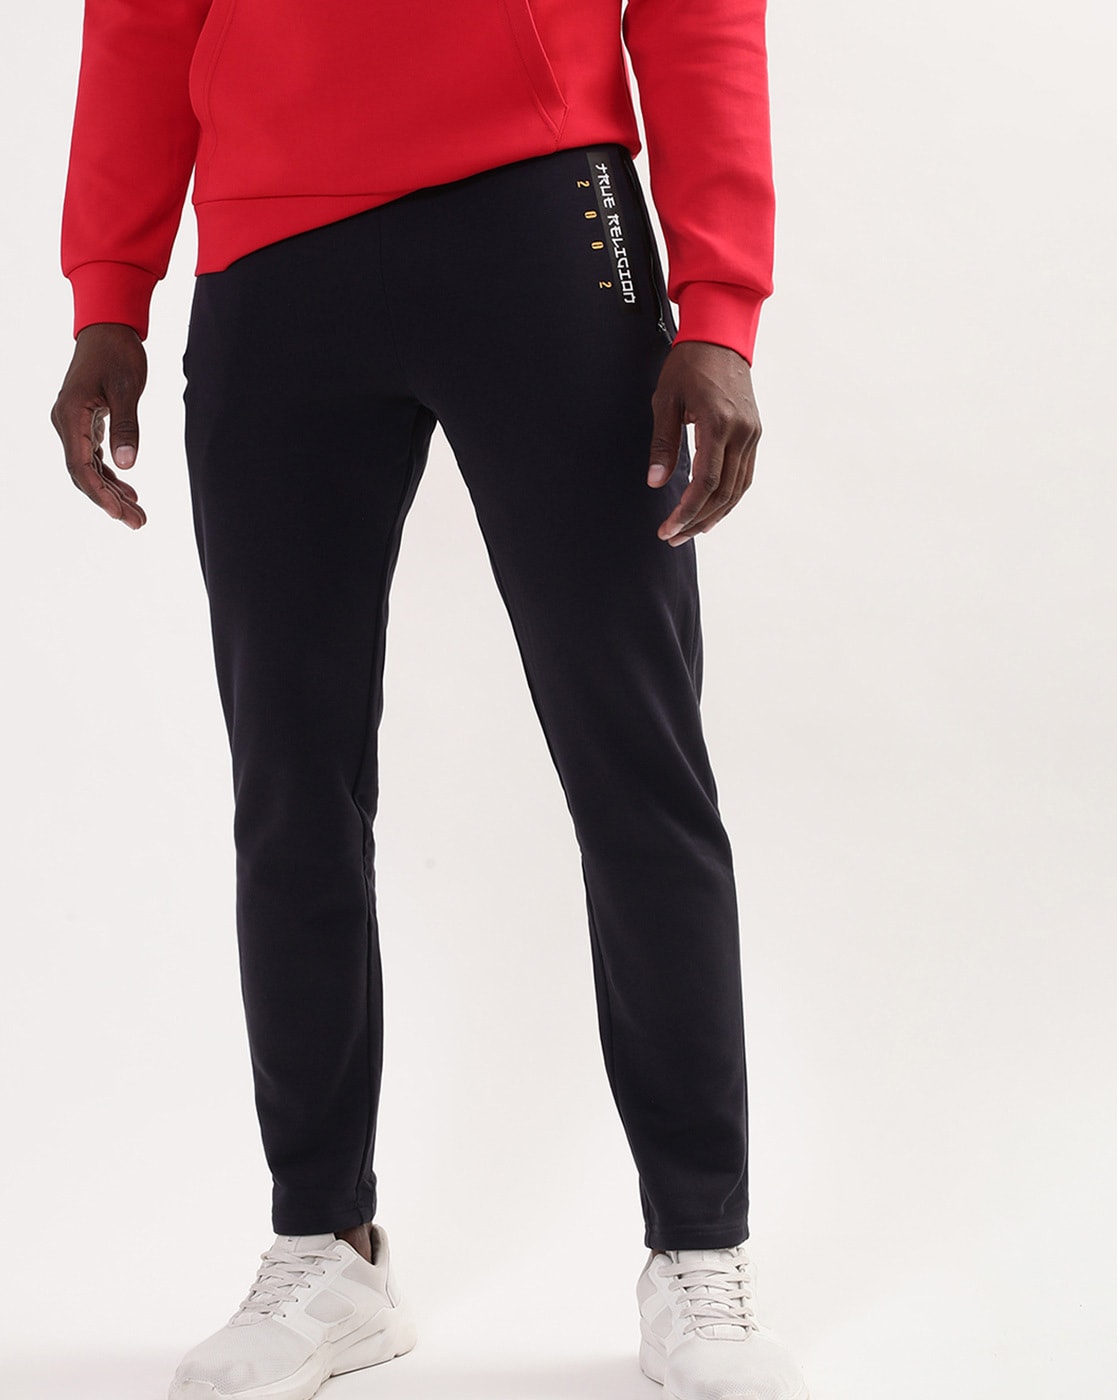 Kith x Bergdorf Goodman Men's Green Navy Plaid Lewis Track Pants Size XL  NWT | eBay